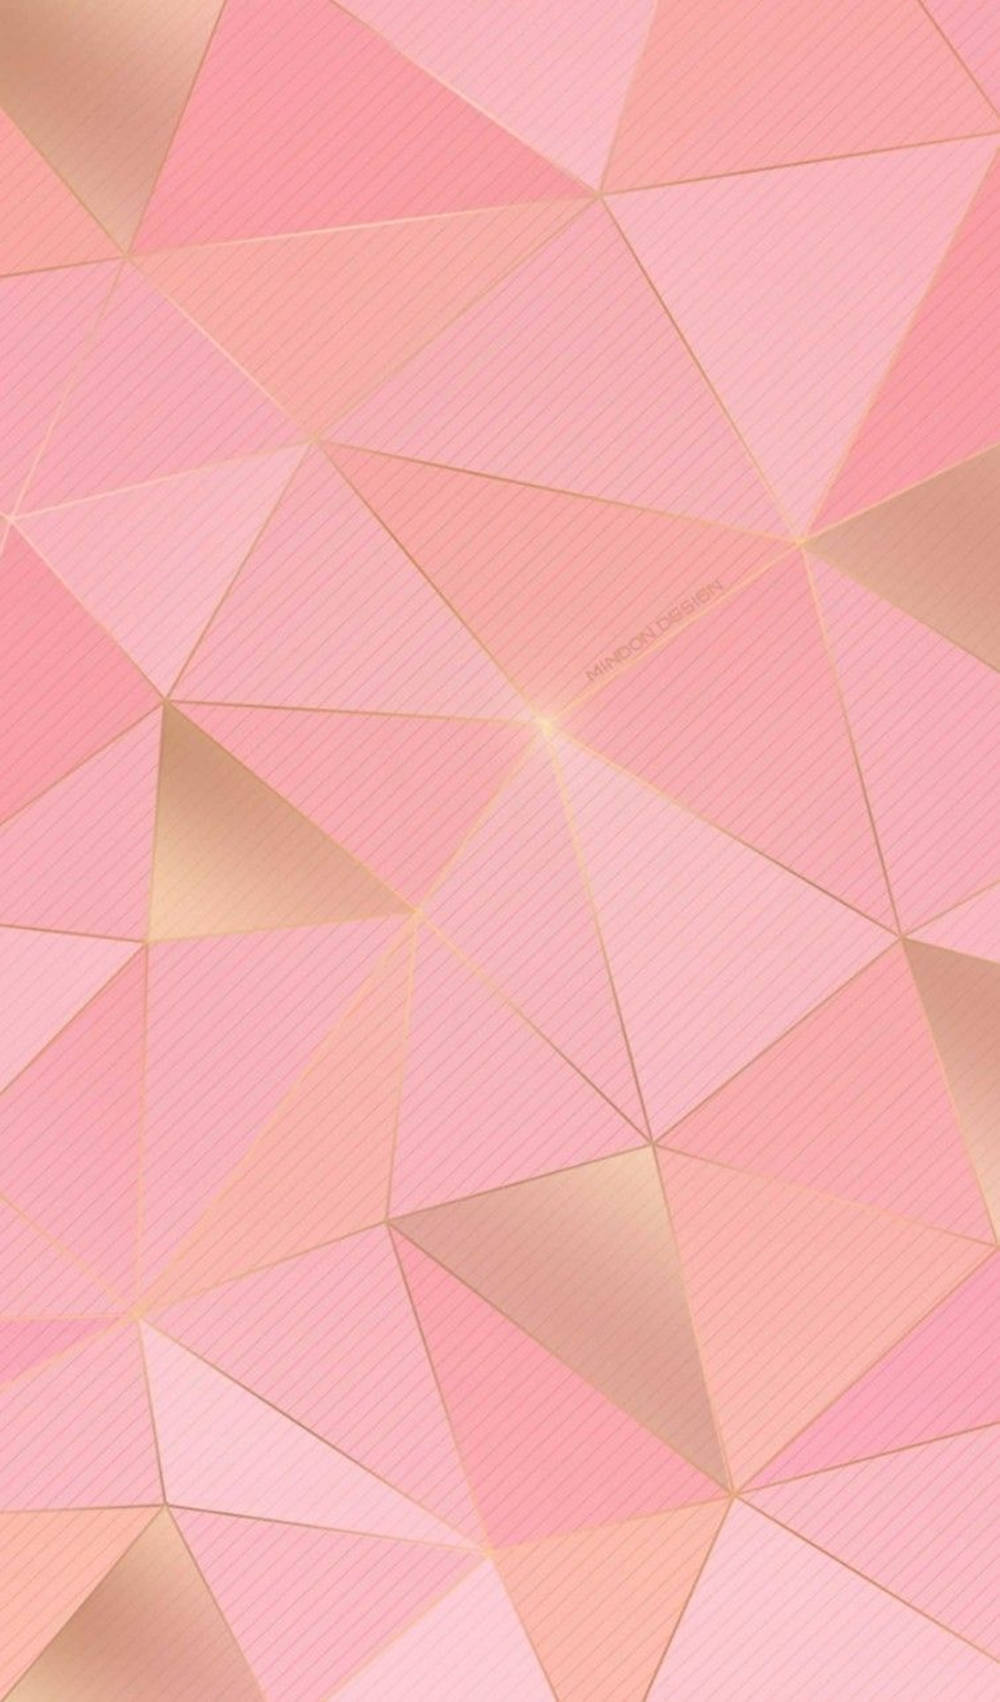 Stunning Rose Gold Ipad Displayed Amidst Intricate Geometric Triangles